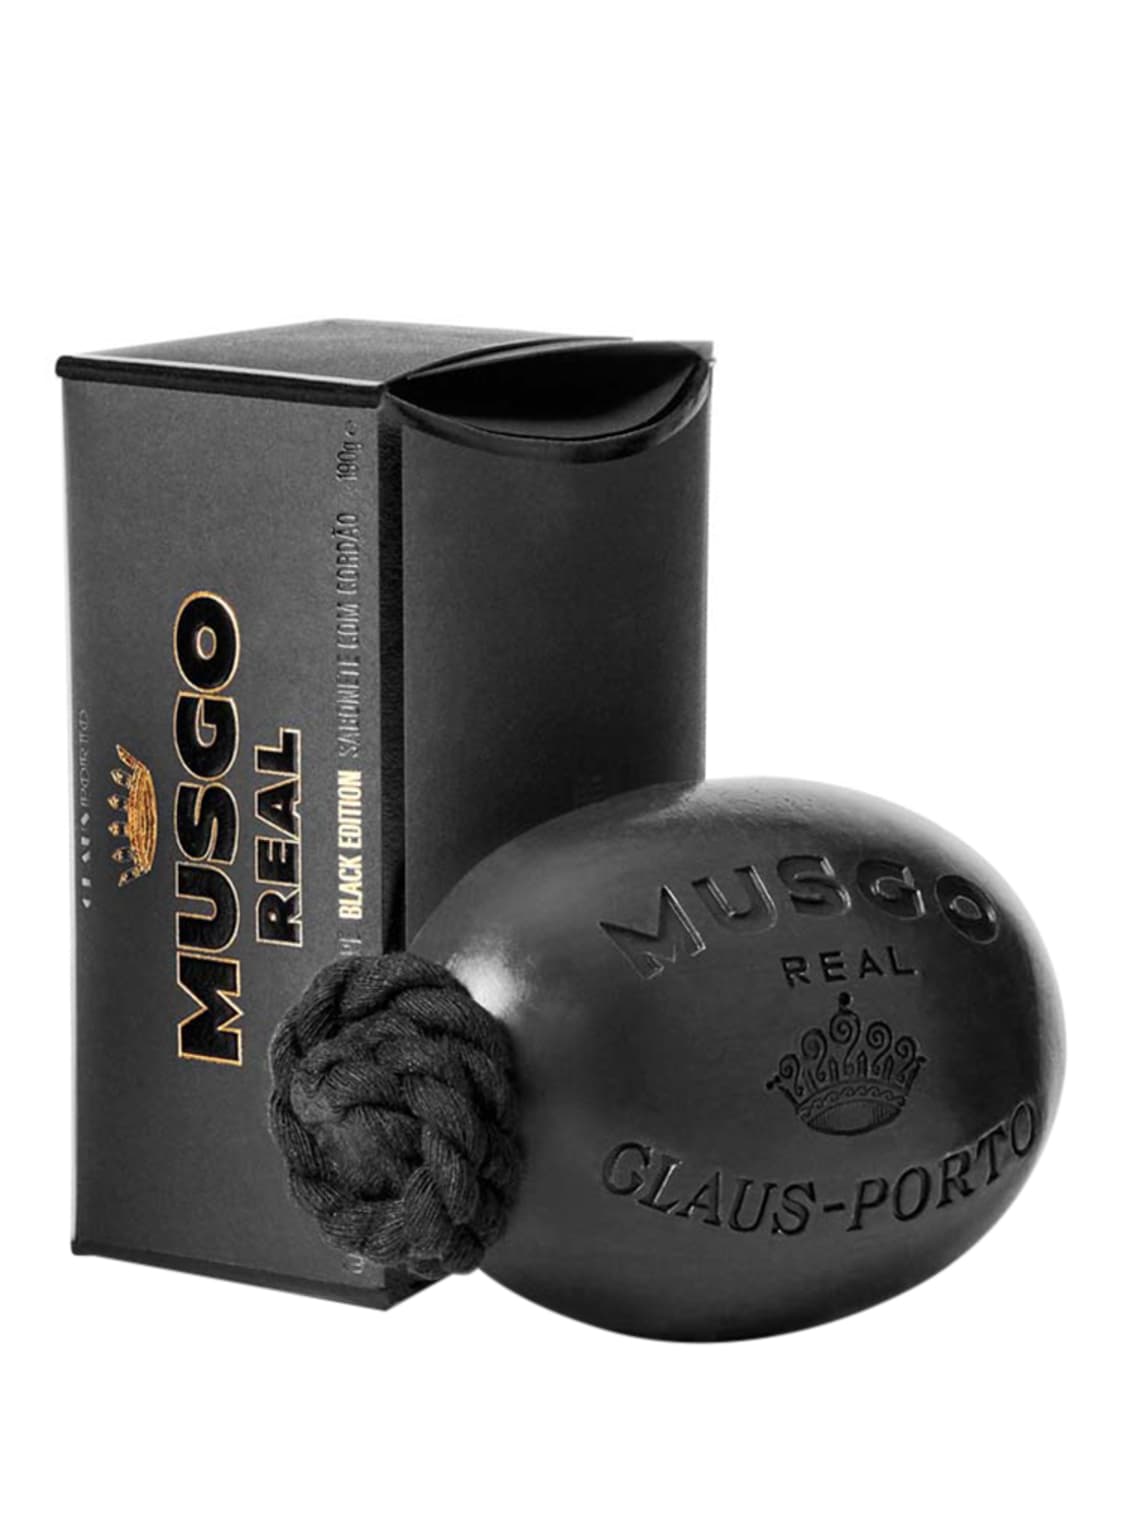 Claus Porto Musgo Real Black Edition Seife 190 g von CLAUS PORTO